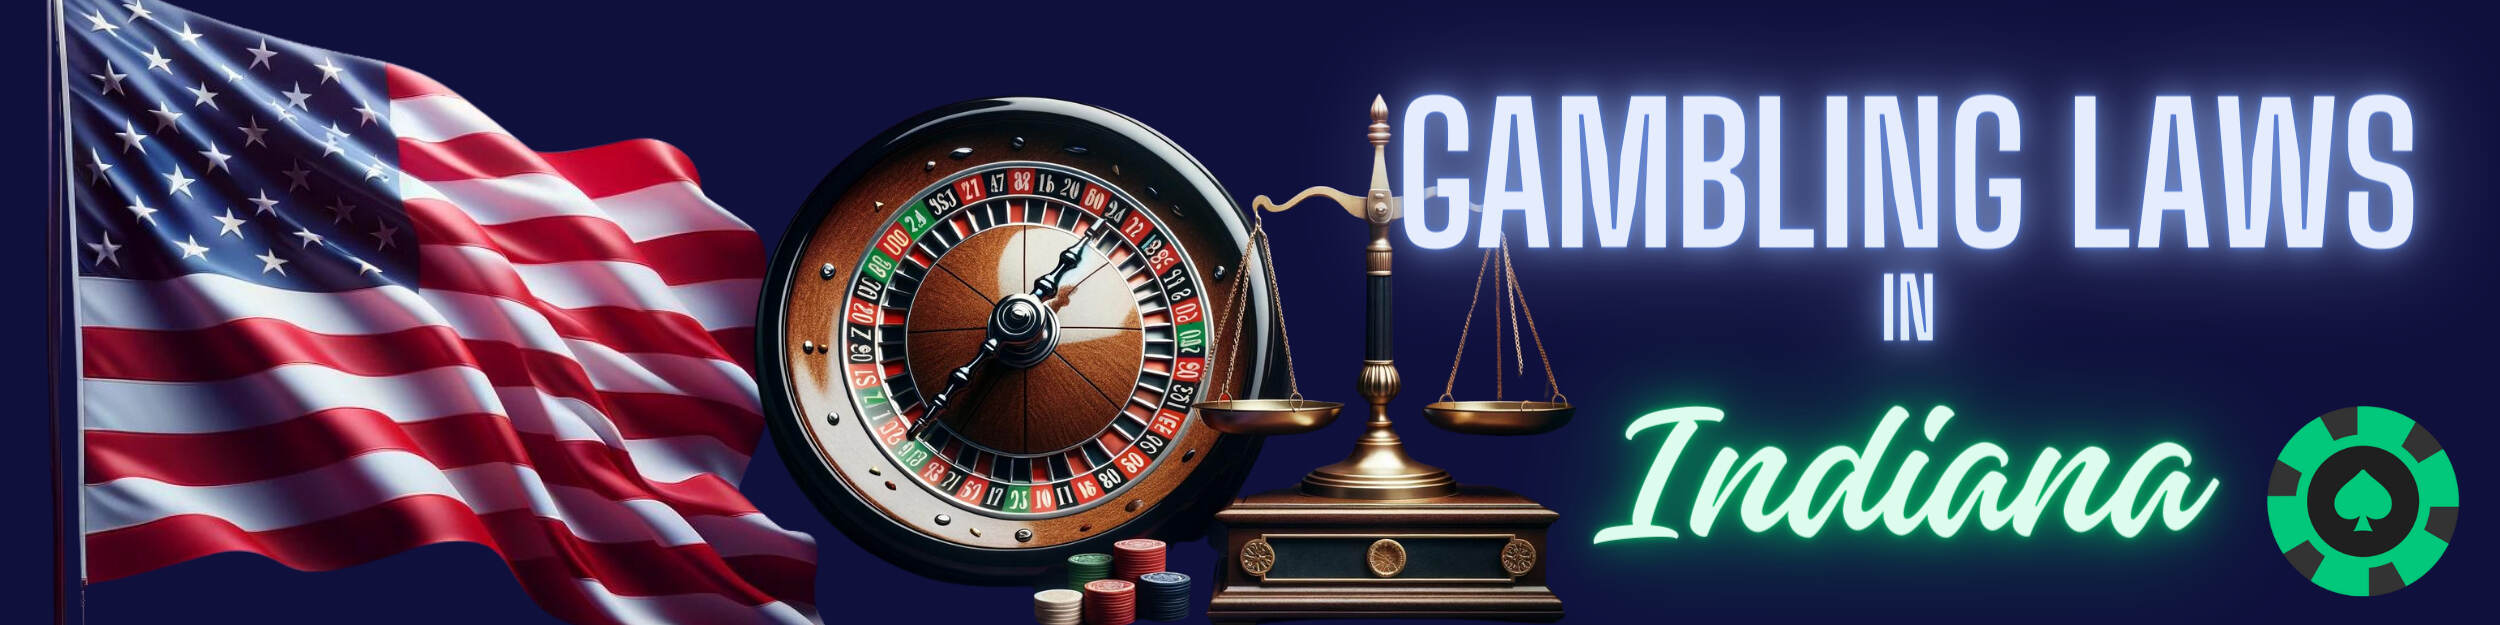 Gambling Laws in Indiana